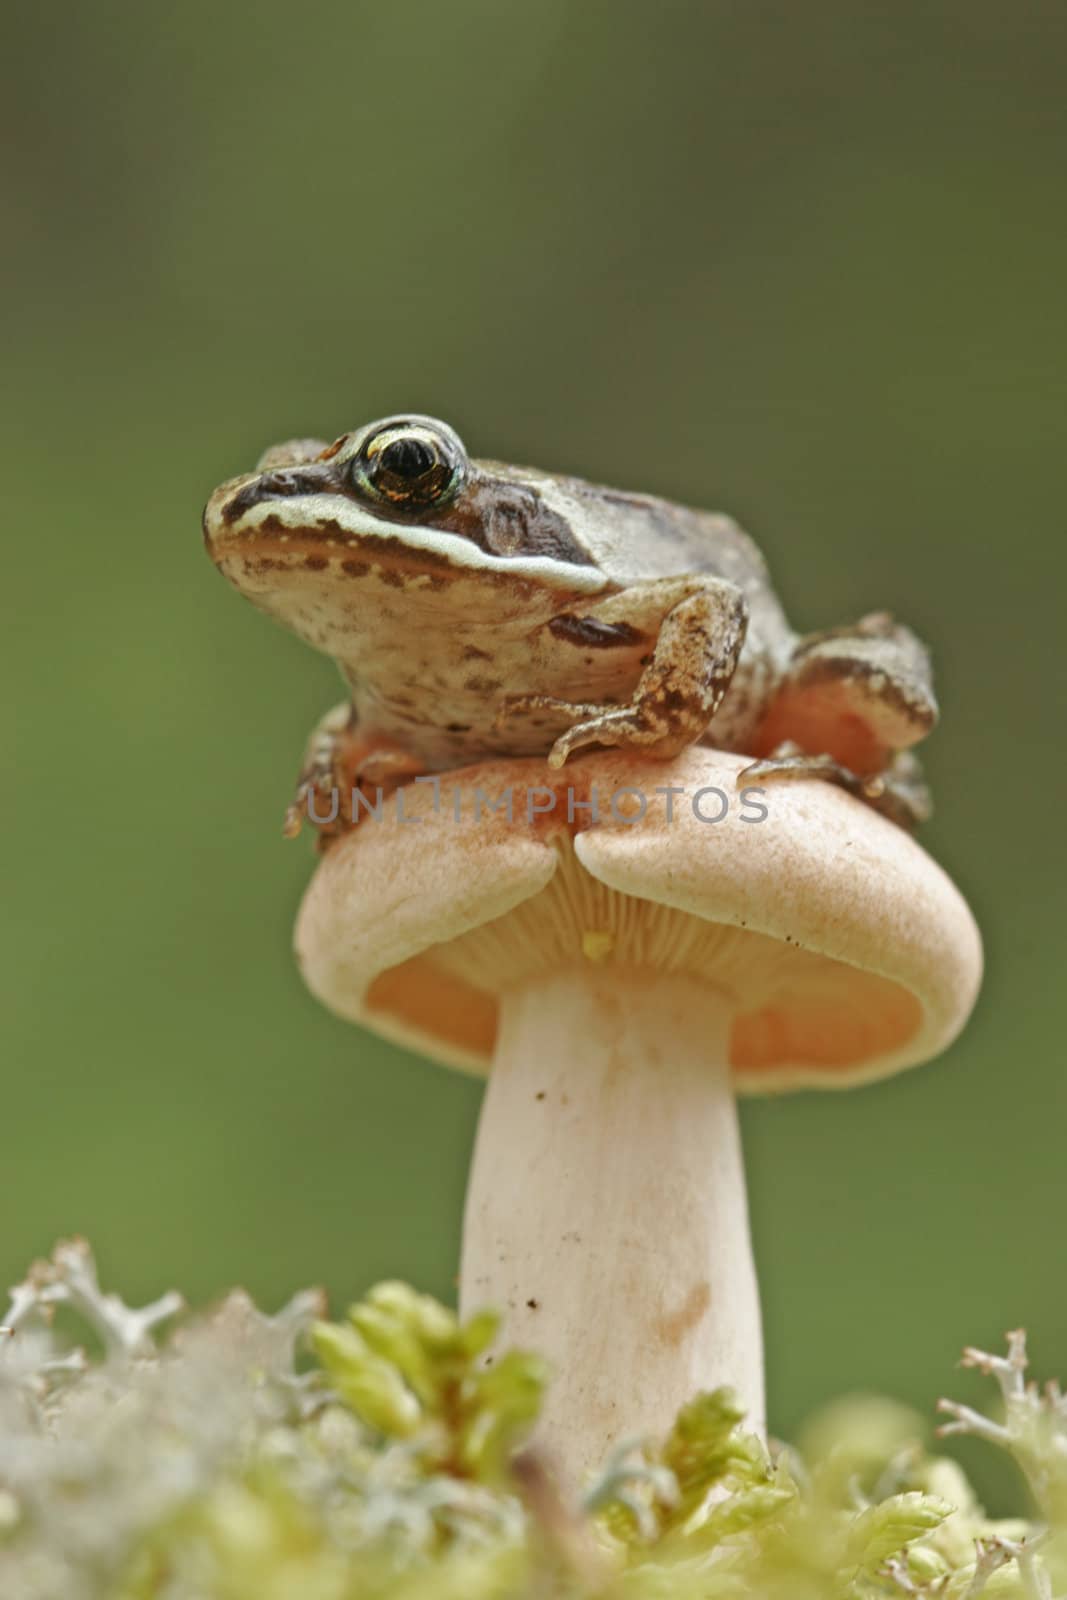 Wood frog (Rana sylvatica) on mushroom by donya_nedomam